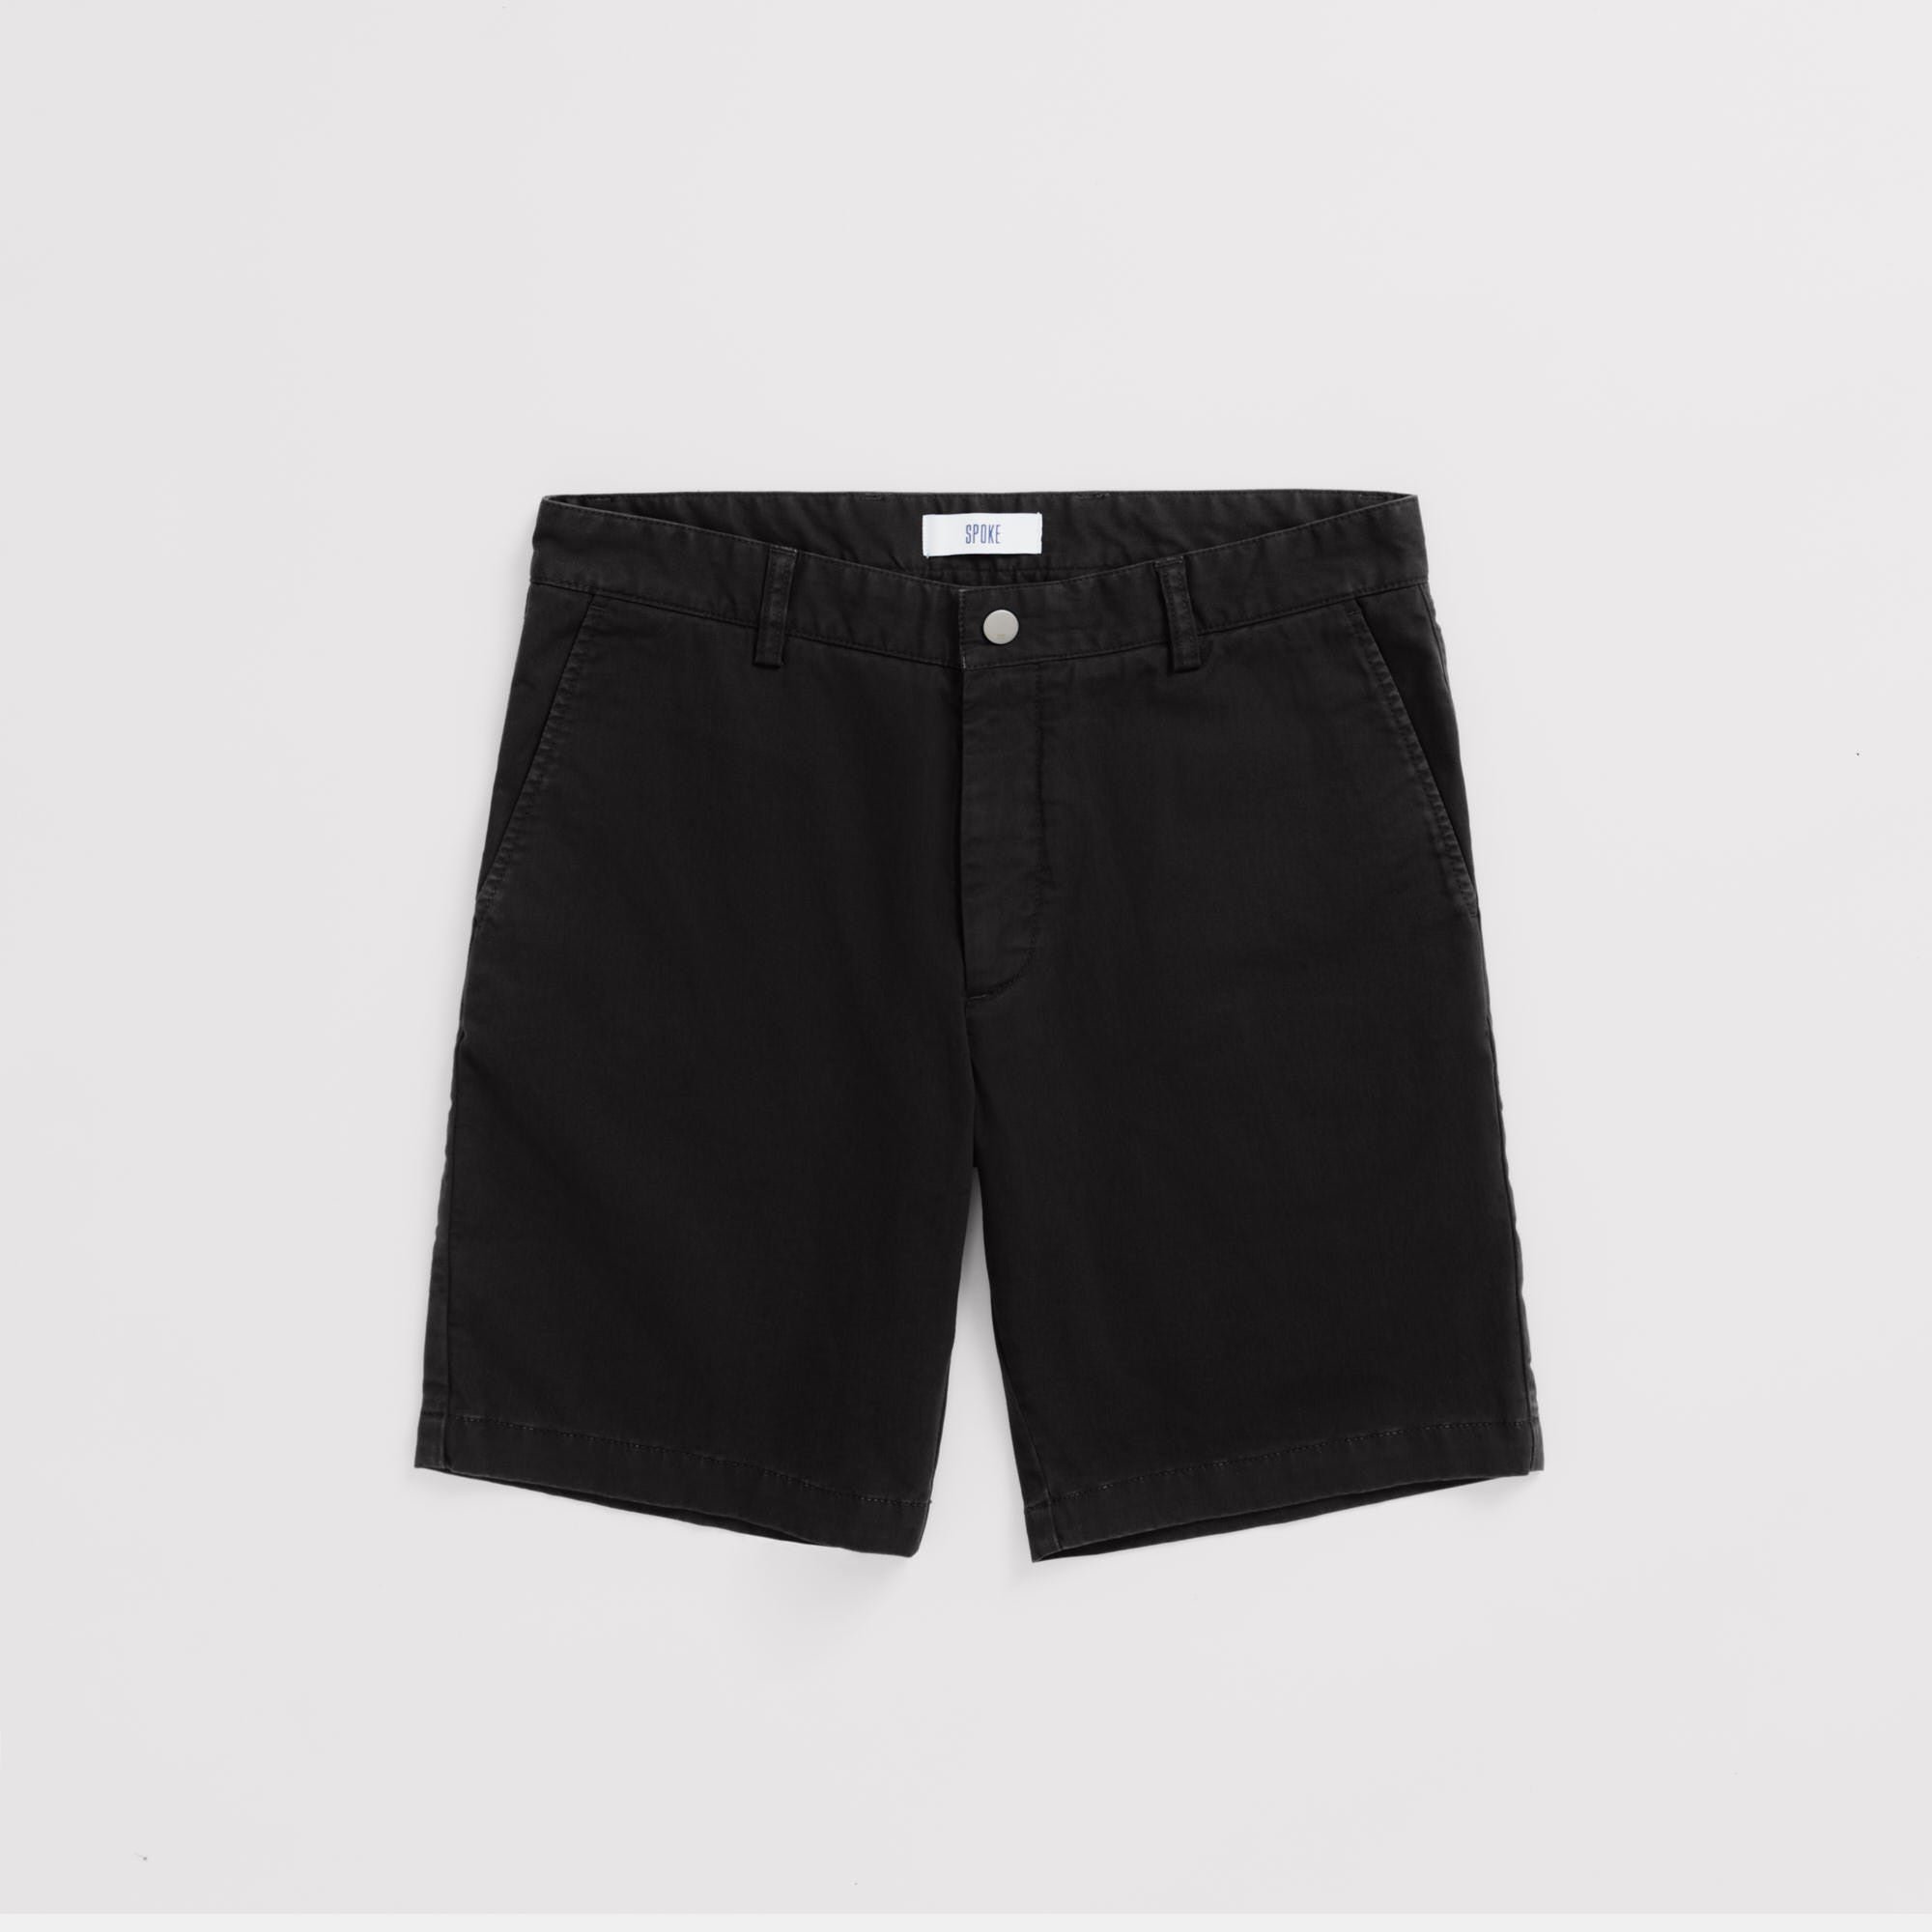 SPOKE Hero Shorts - Black Custom Fit Shorts - SPOKE